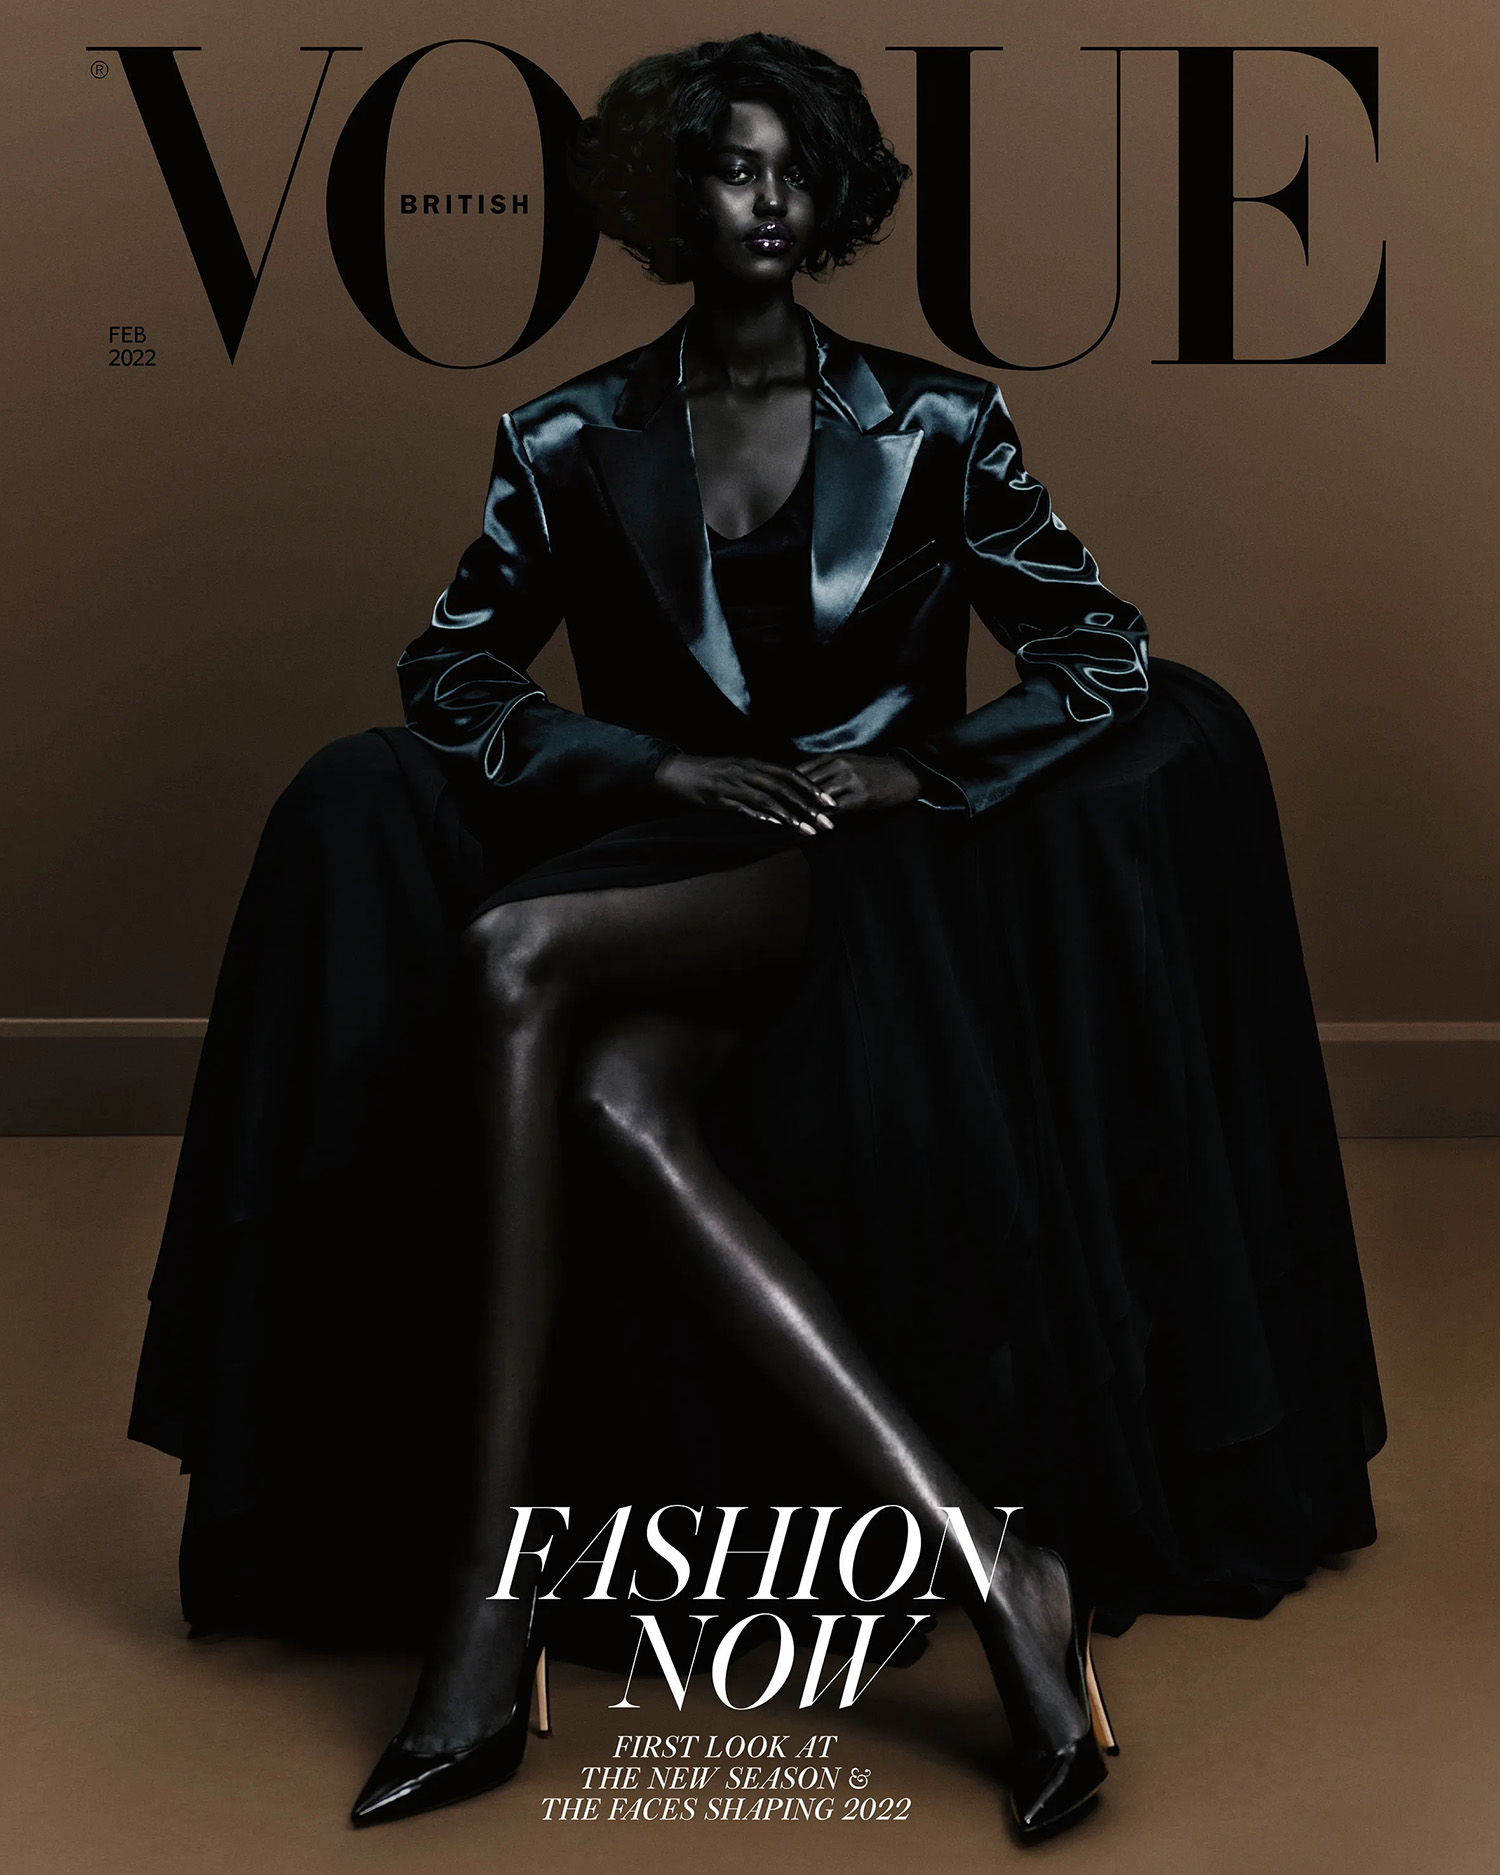 British Vogue February 2022 covers by Rafael Pavarotti